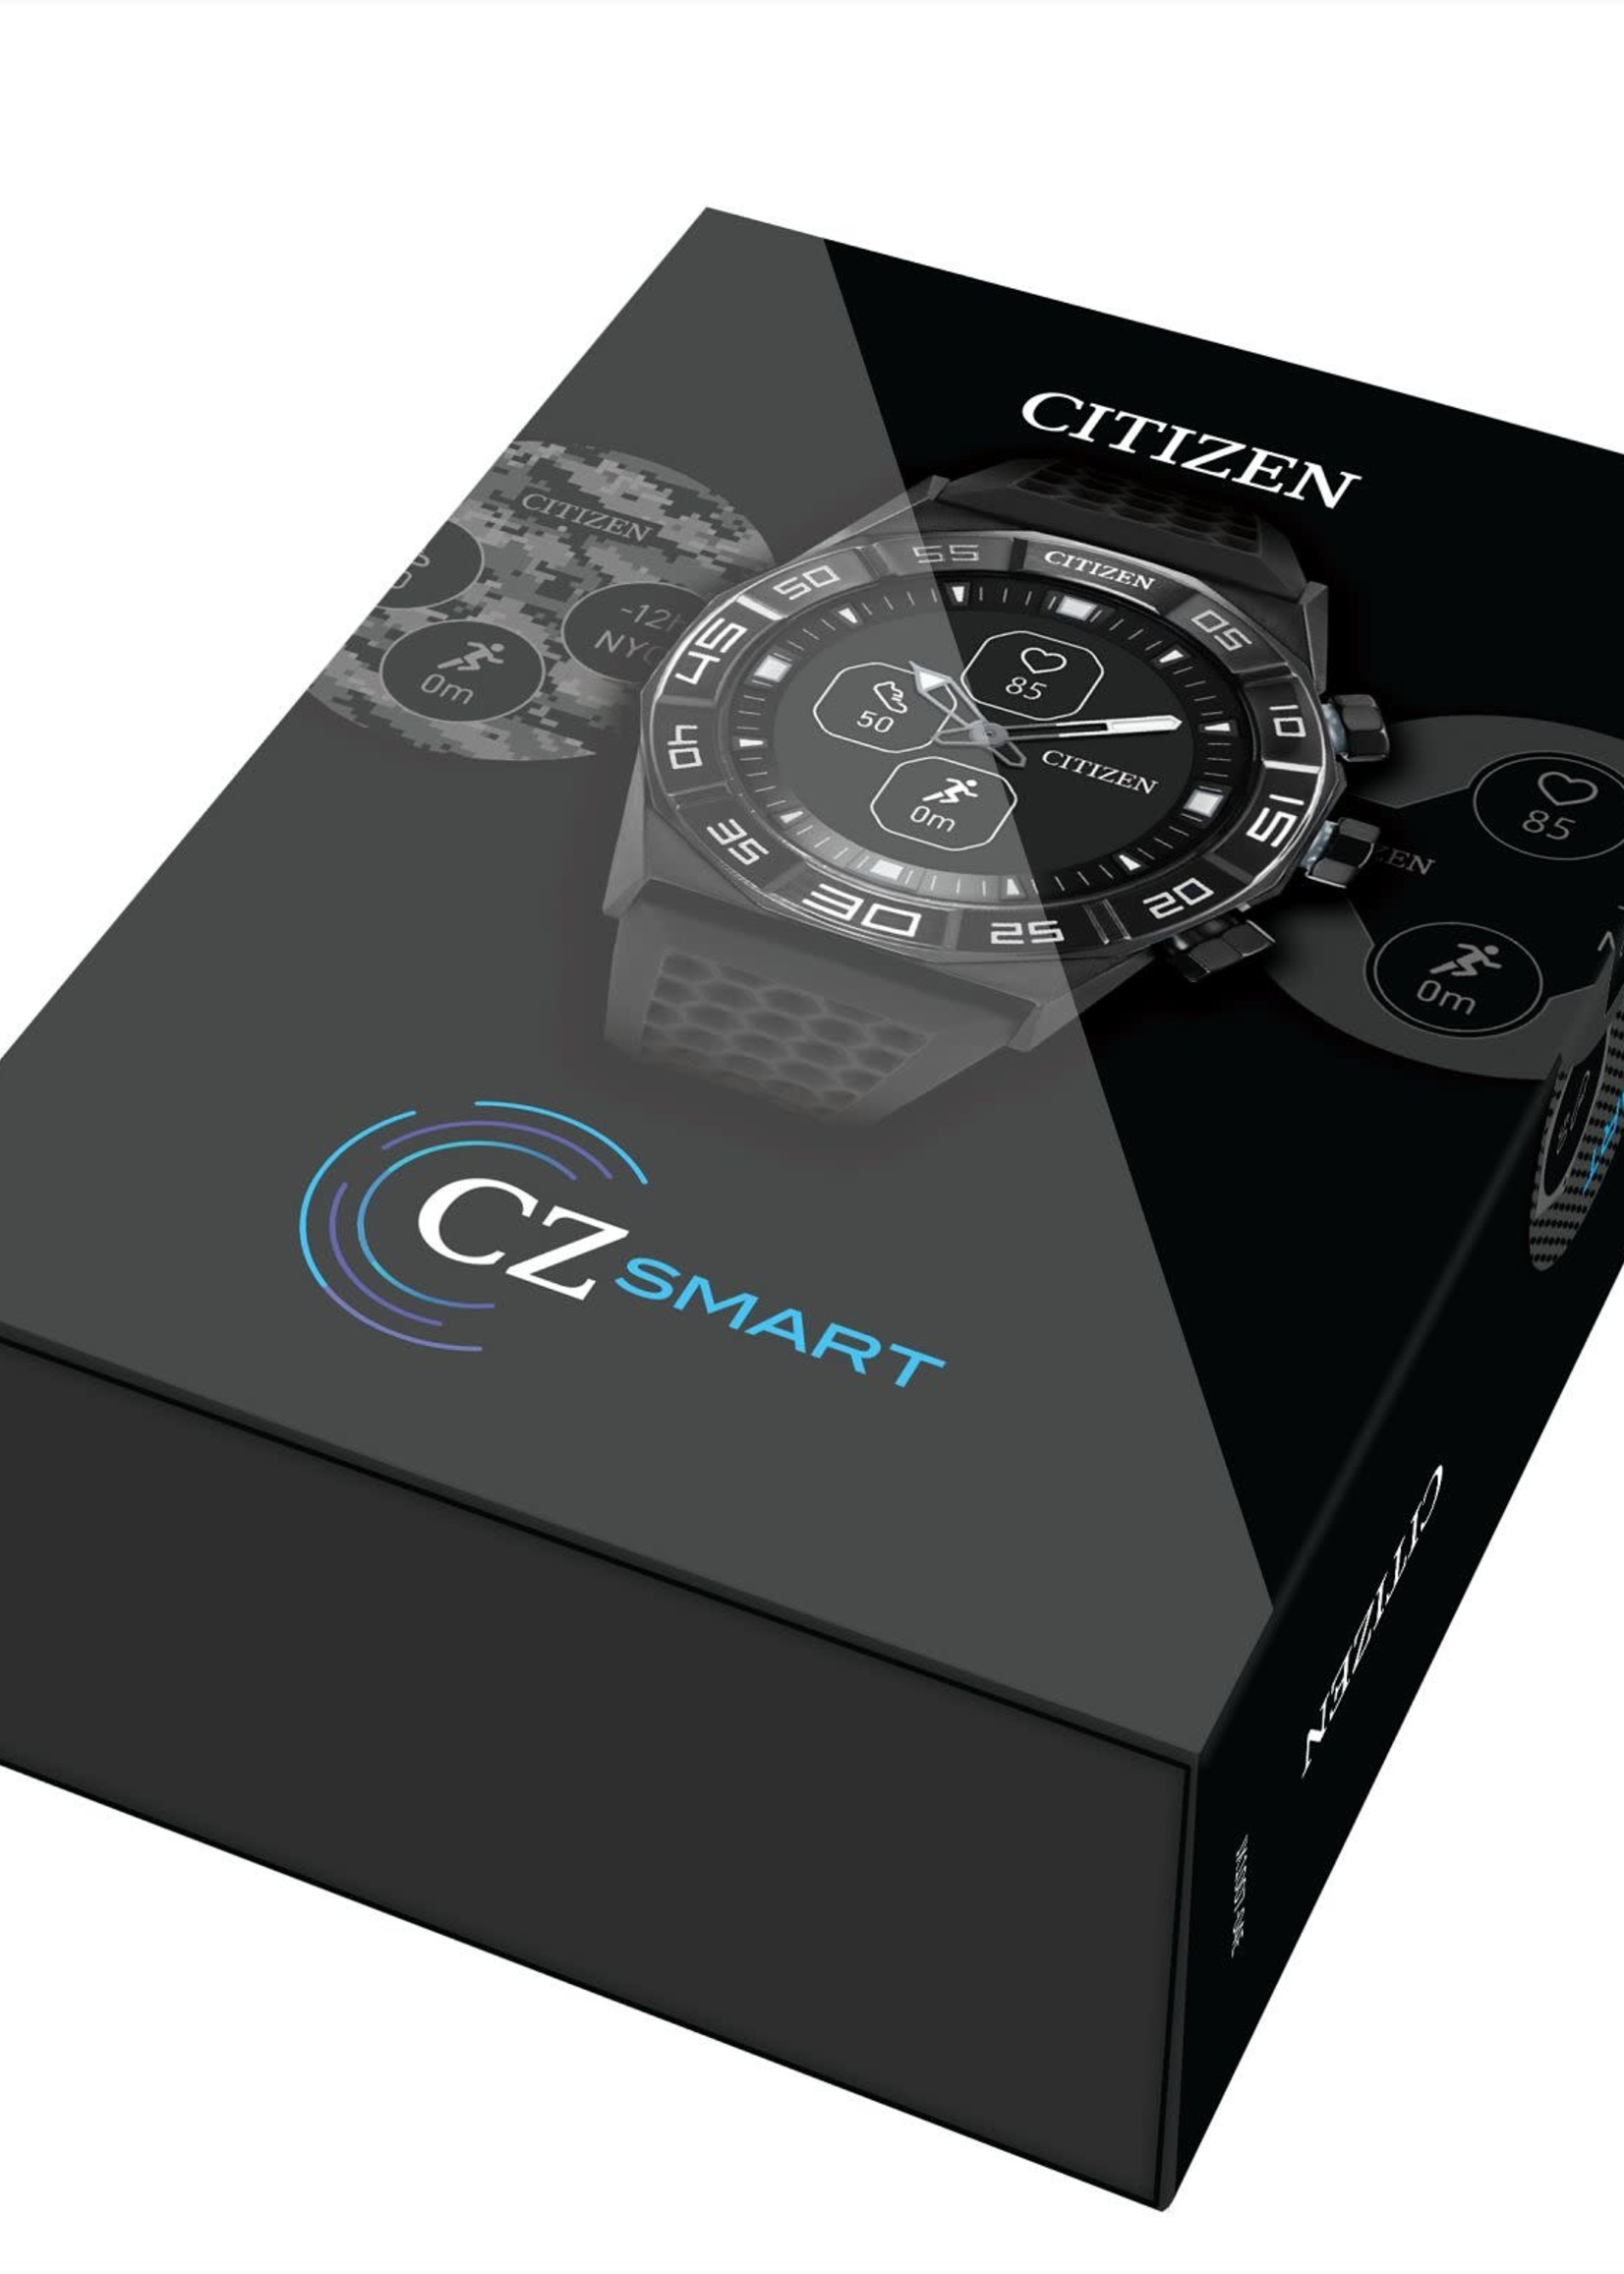 CITIZEN WATCH COMPANY Citizen smart Hybrid watch black strap stainless case